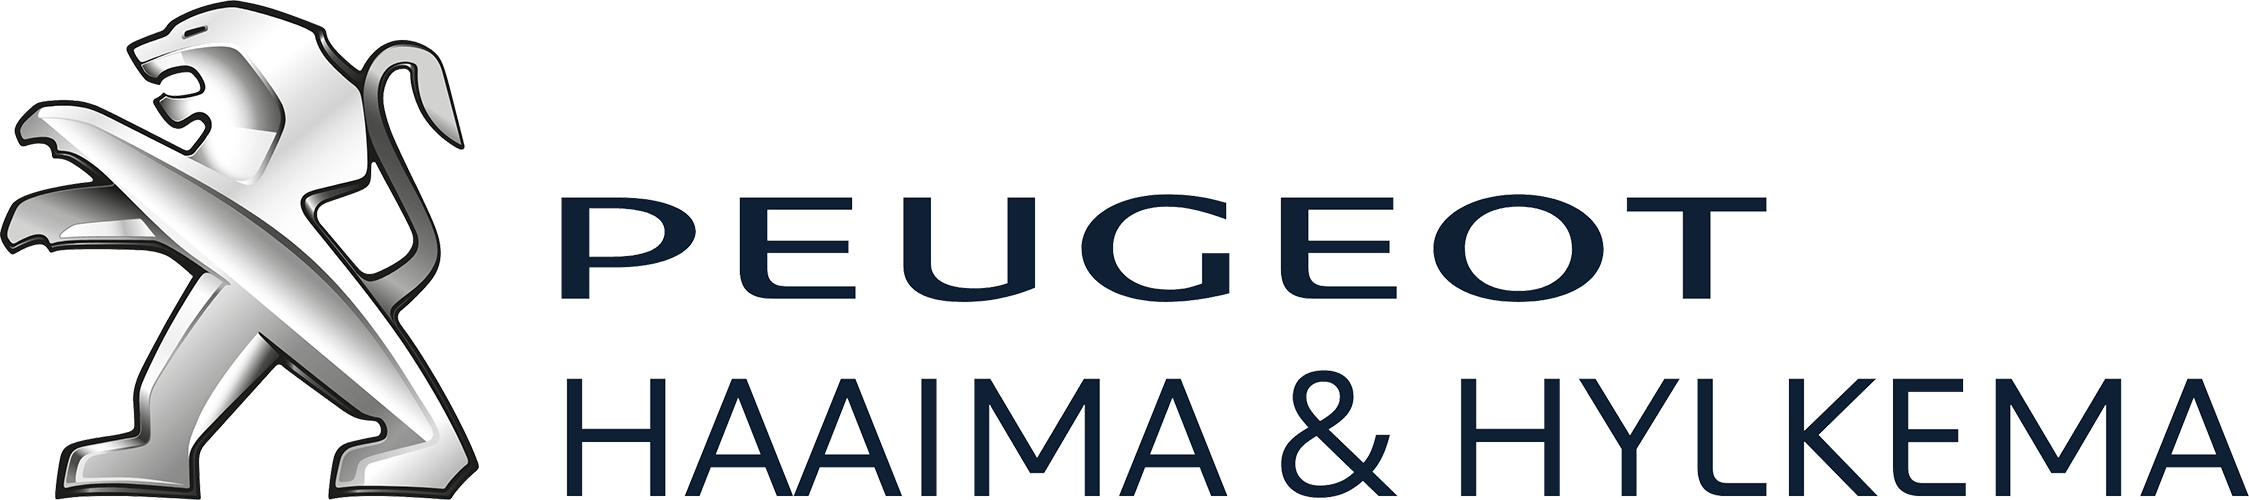 Peugeot haaima en hylkema logo partner Jur Wiersema Multimedia Groningen